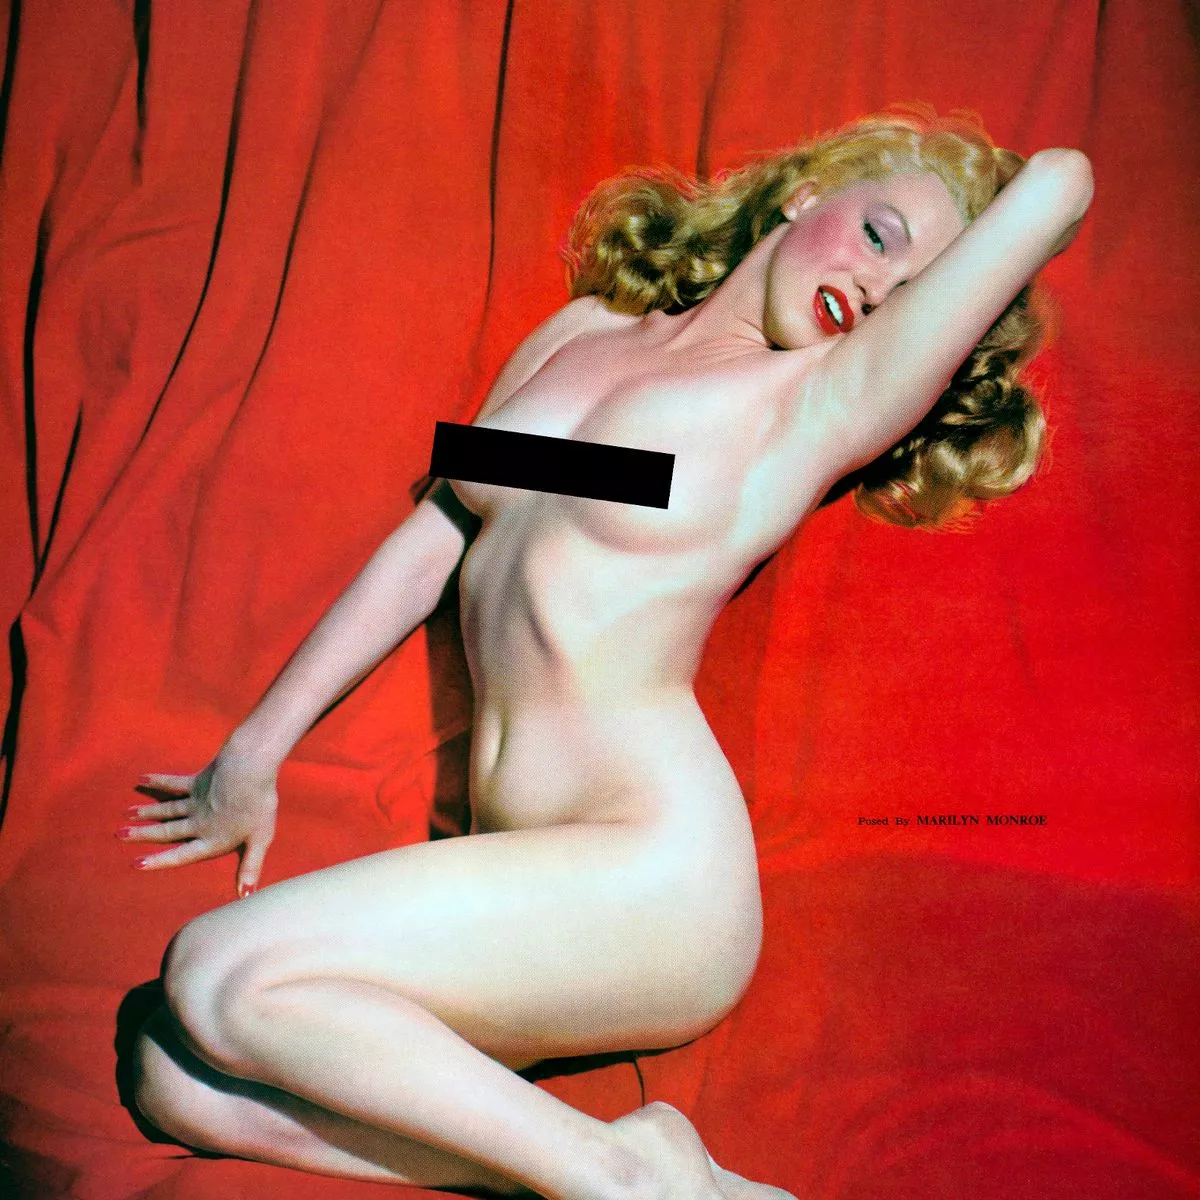 Best of Marilyn monroe hot nude